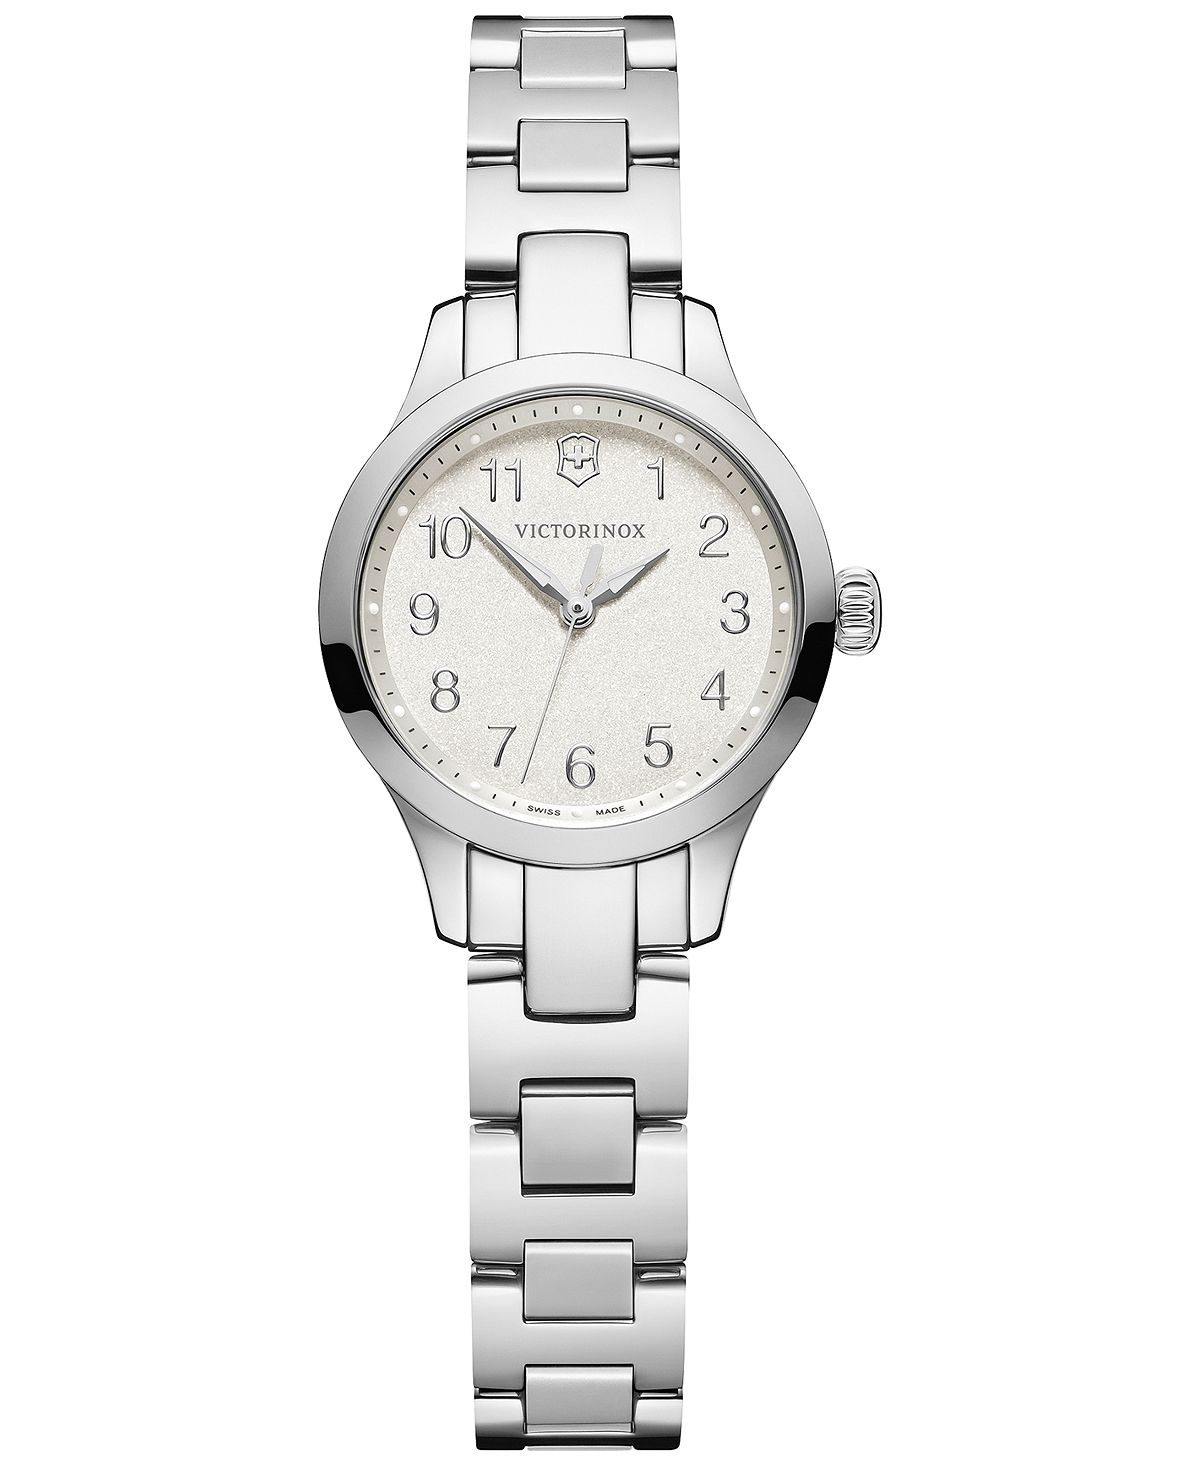 Женские часы Alliance XS с браслетом из нержавеющей стали, 28 мм Victorinox afawa 2020 jesus stainless steel necklaces